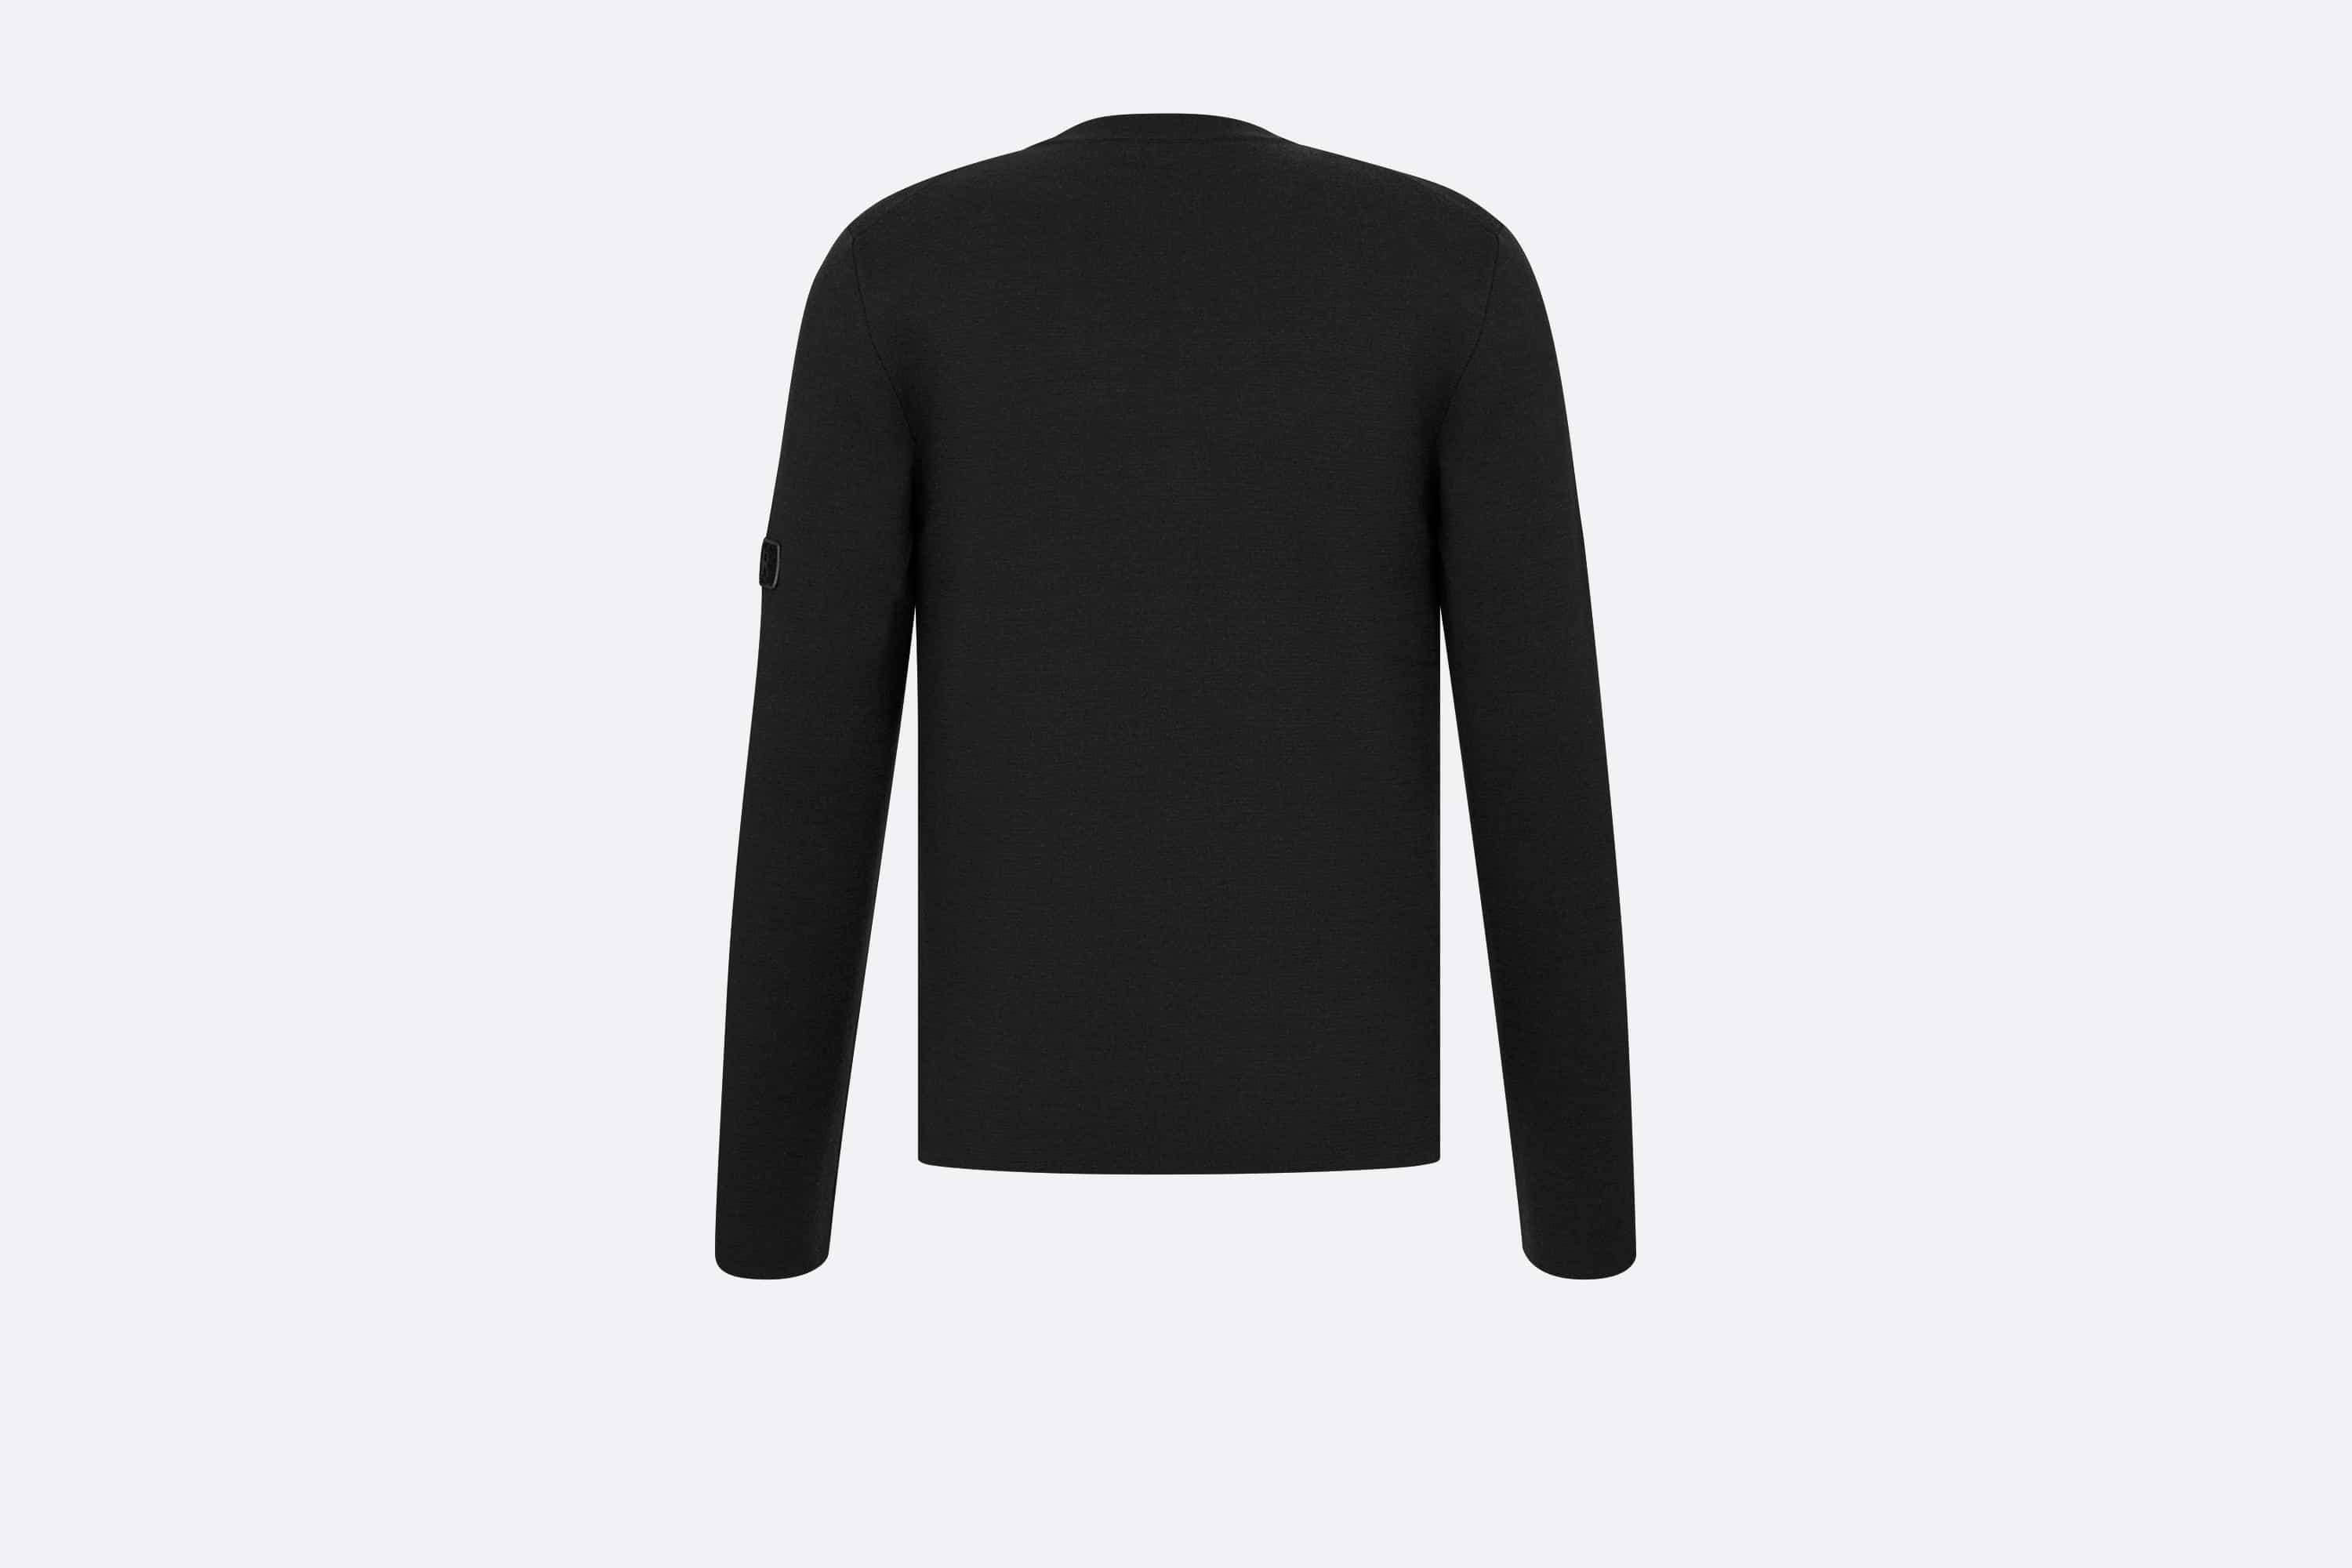 'DIOR' Patch Sweater - 2